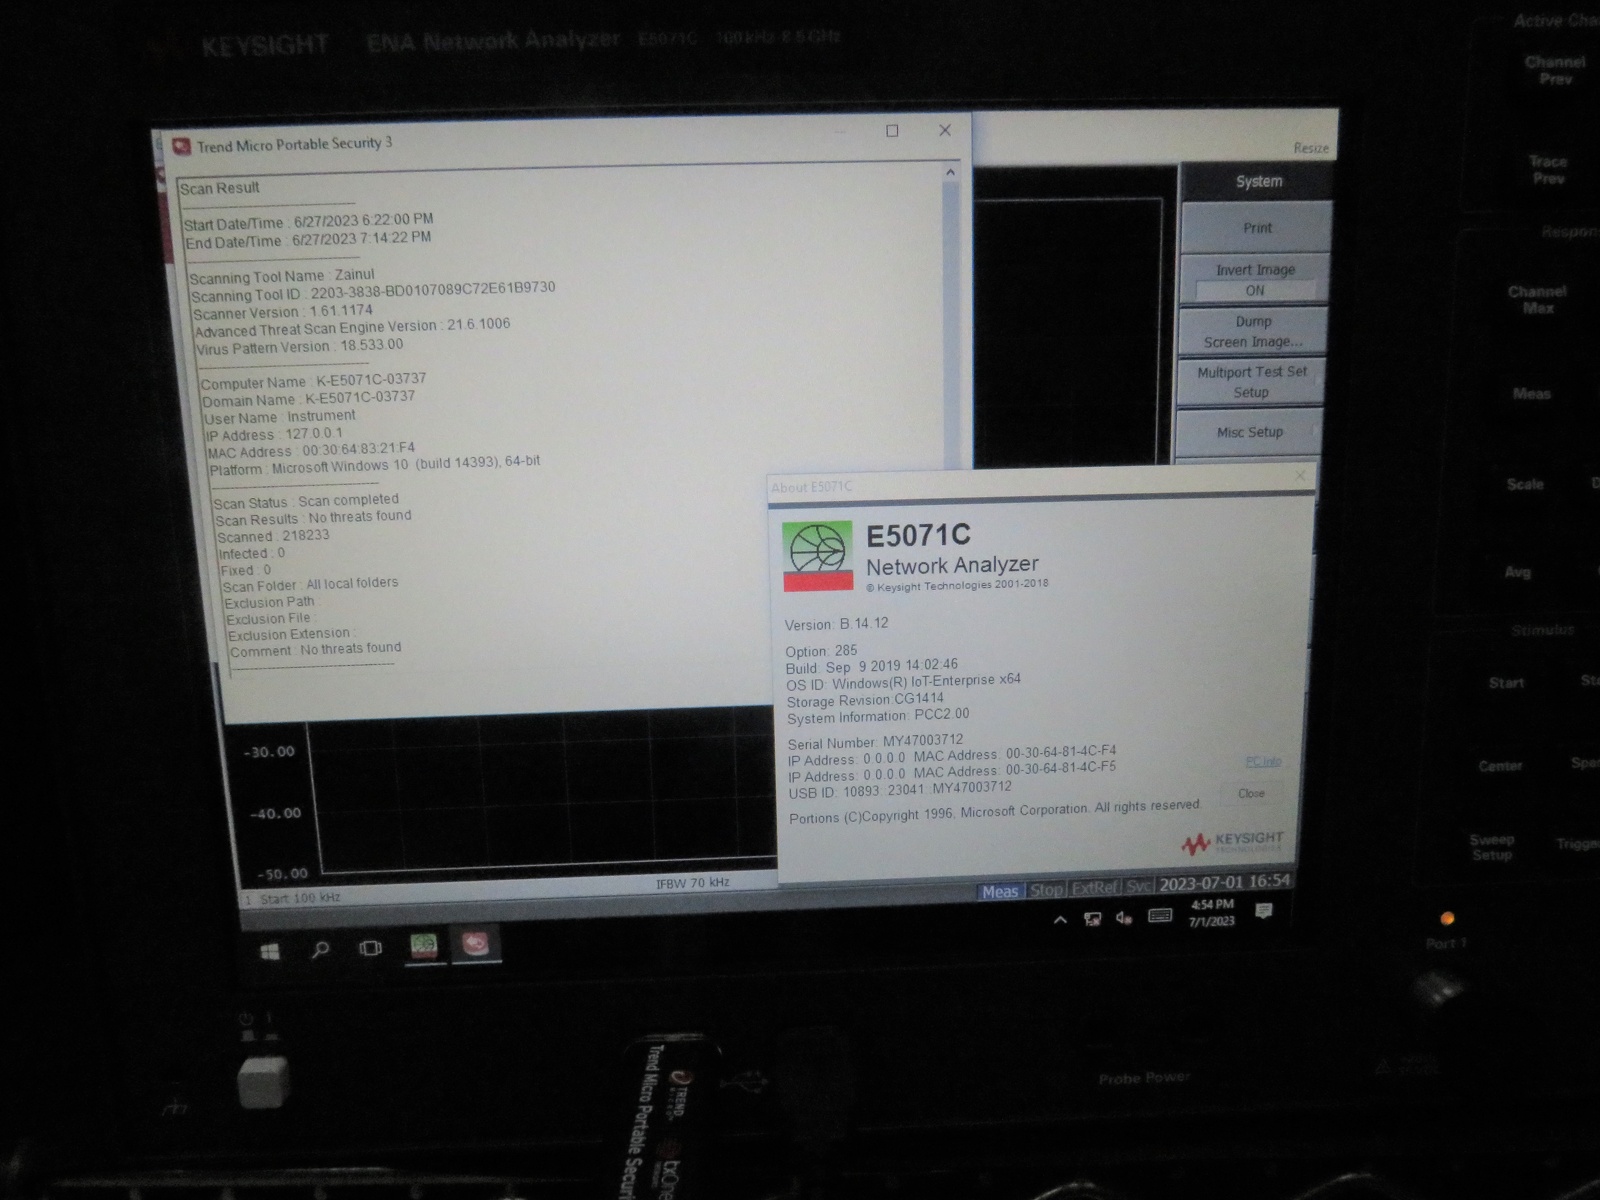 Keysight E5071C-285 2-port Test Set / 100 kHz to 8.5 GHz / With Bias Tees